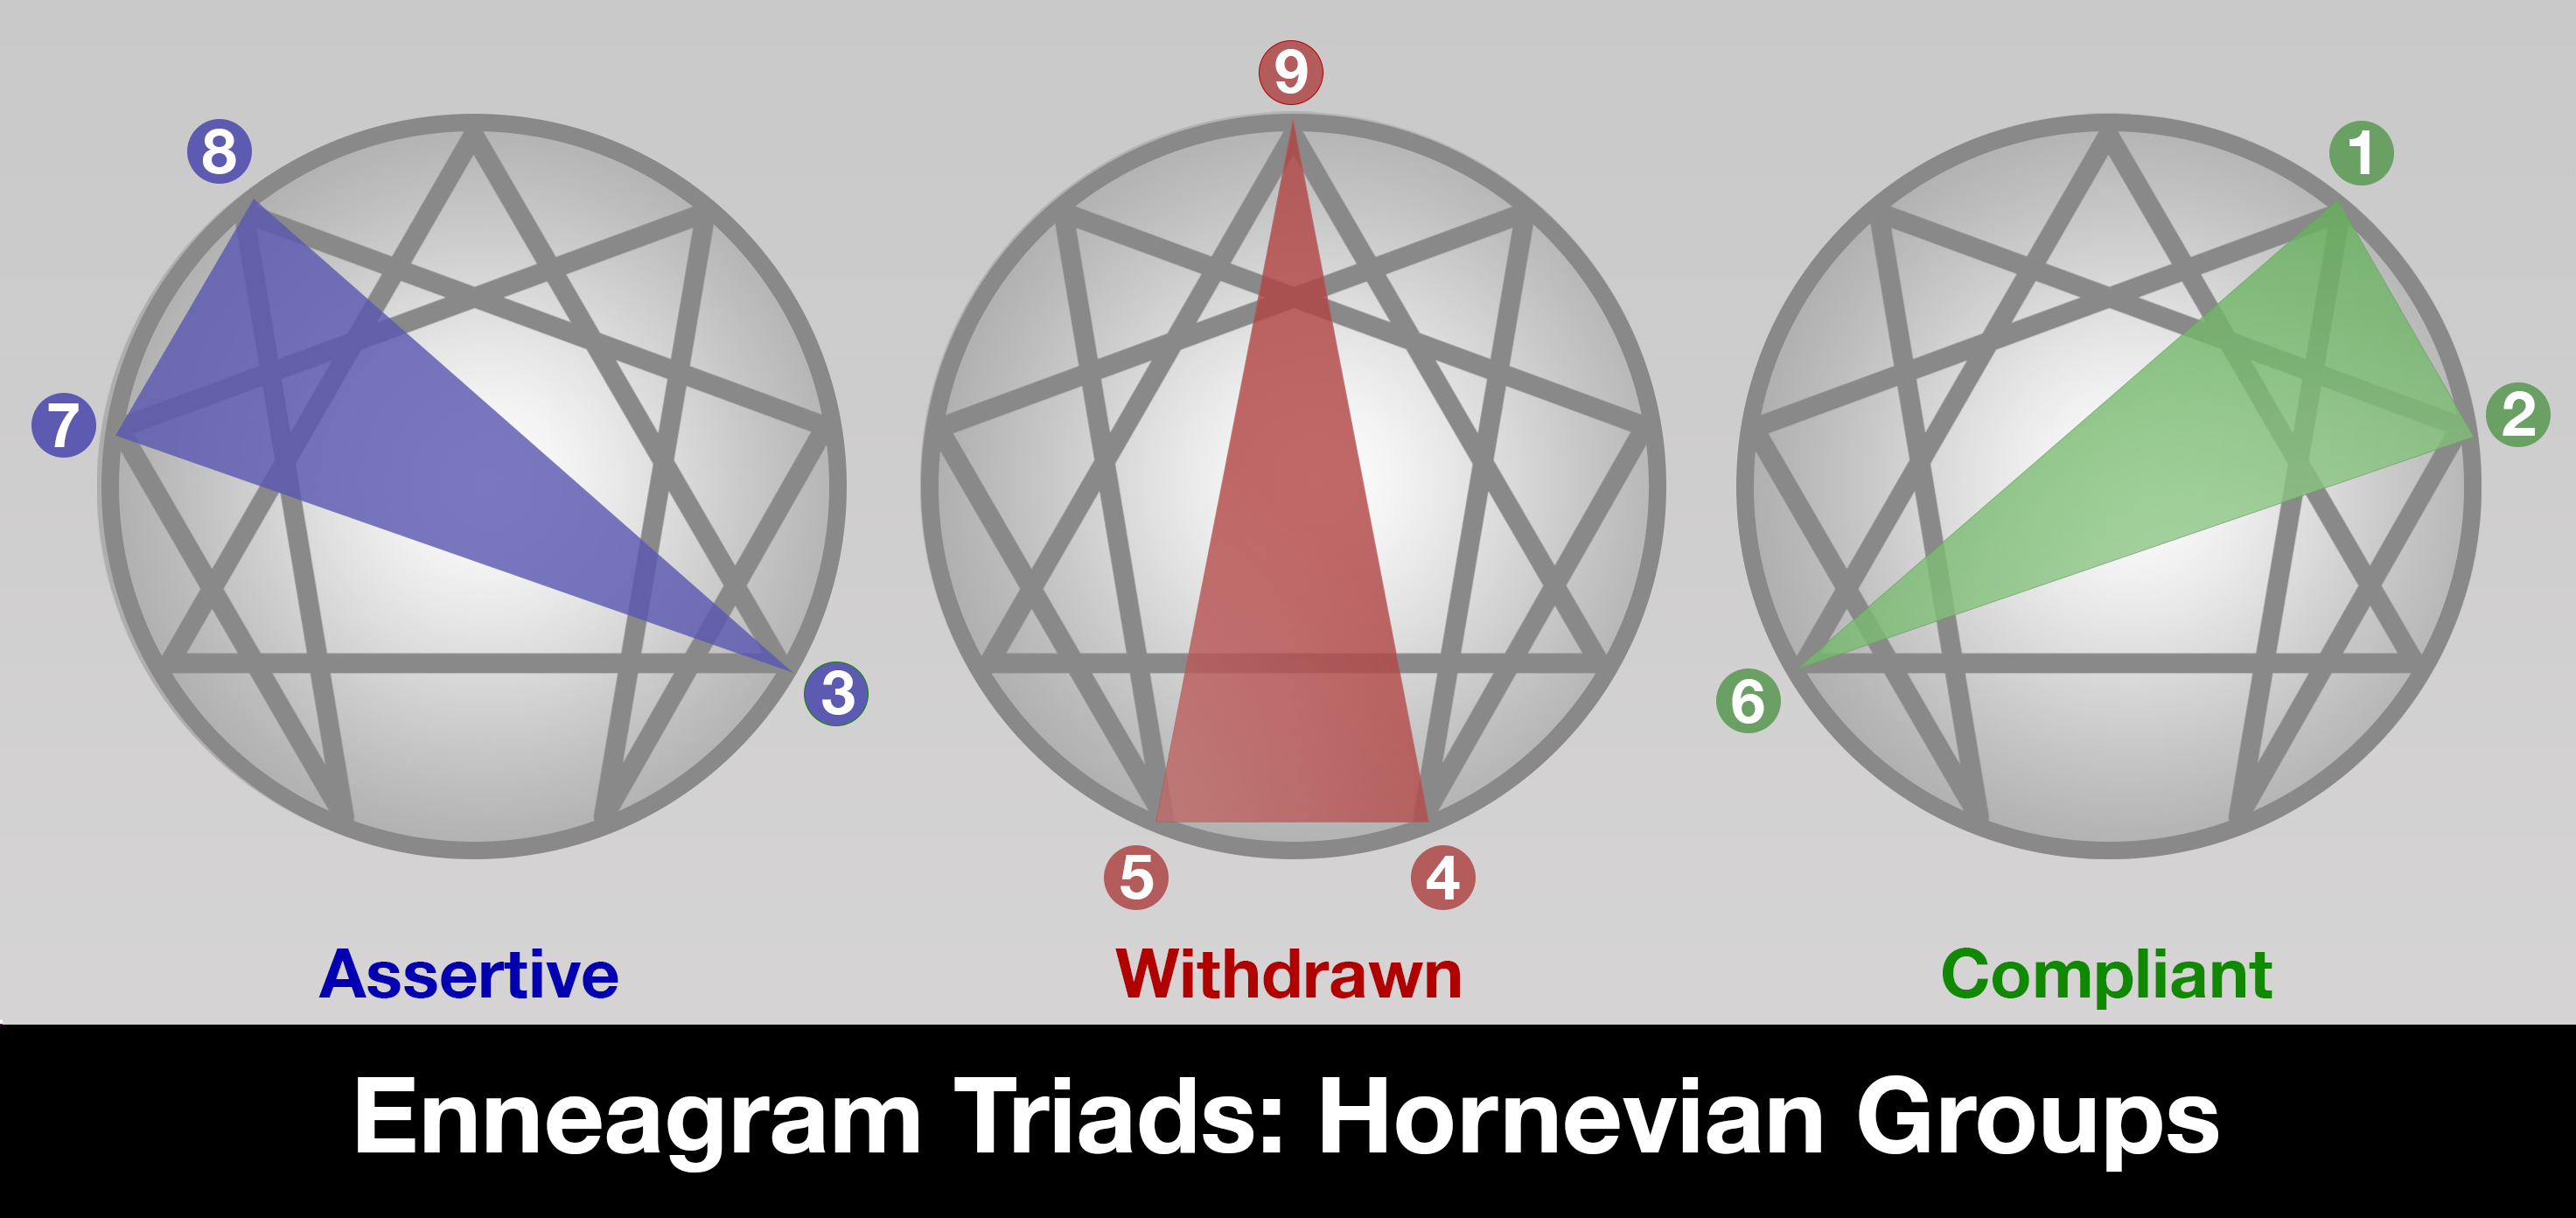 Enneagram Triads: Hornevian Groups (Assertive, Withdrawn, Compliant)